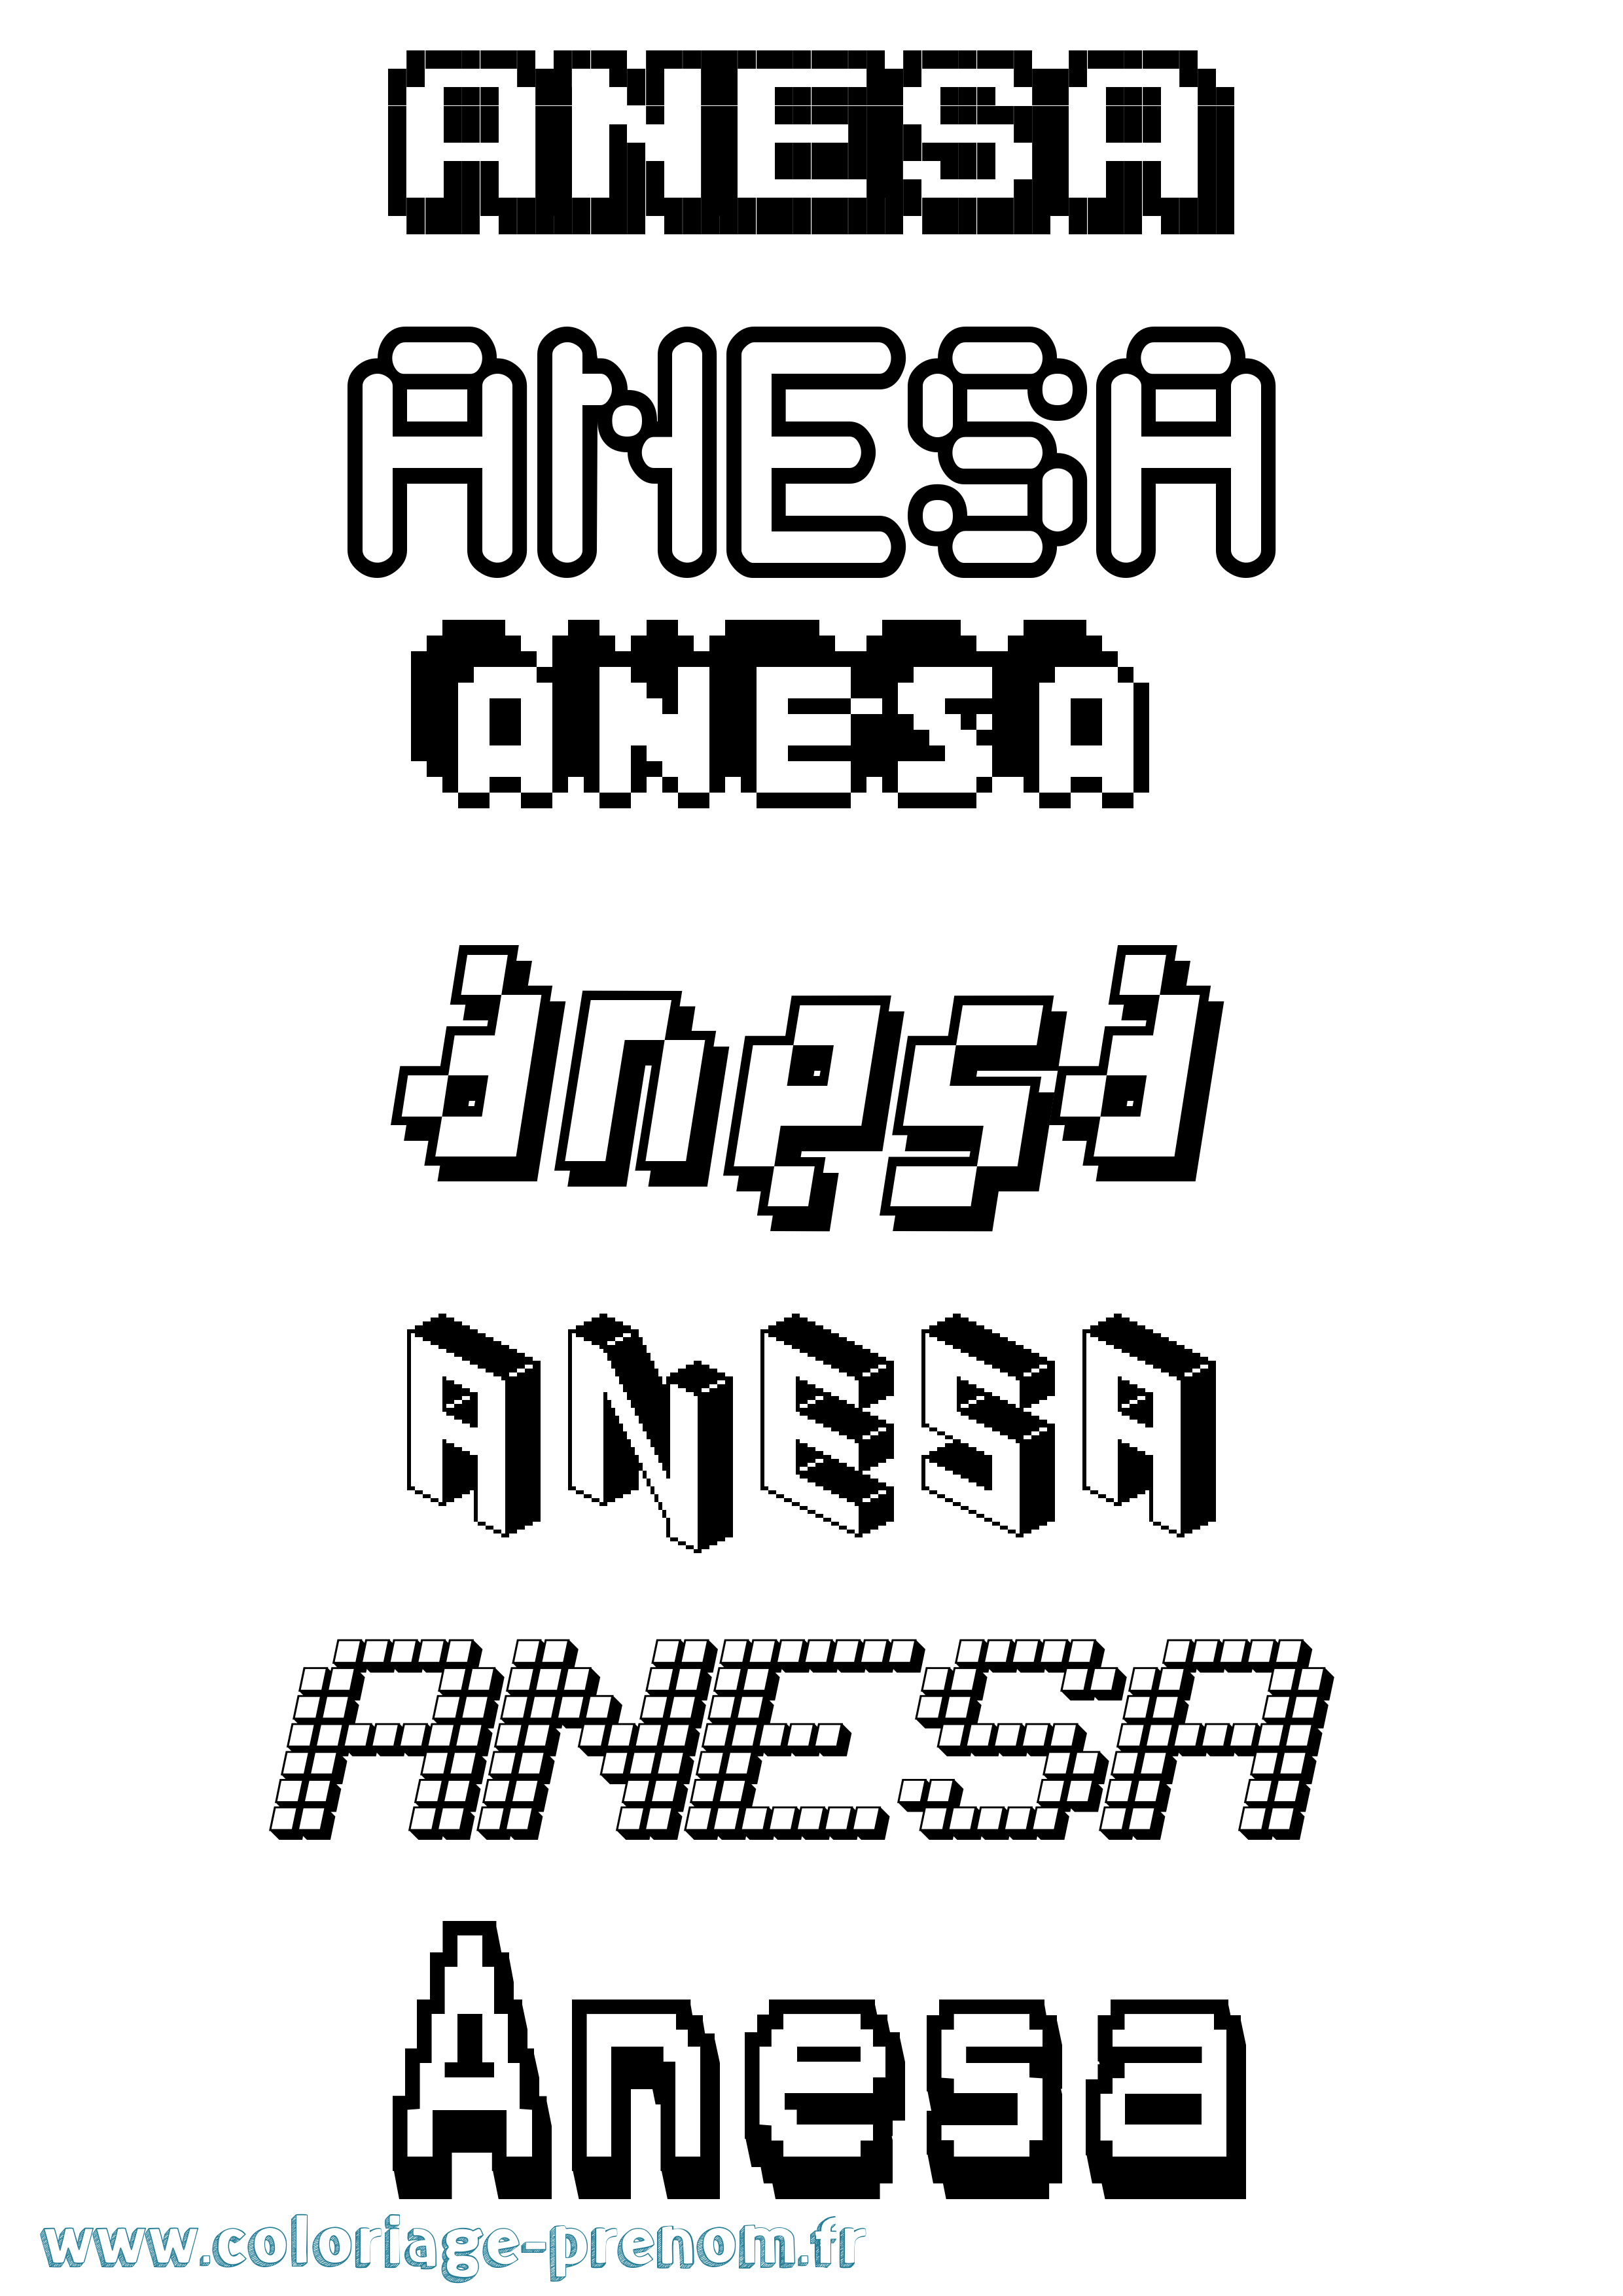 Coloriage prénom Anesa Pixel